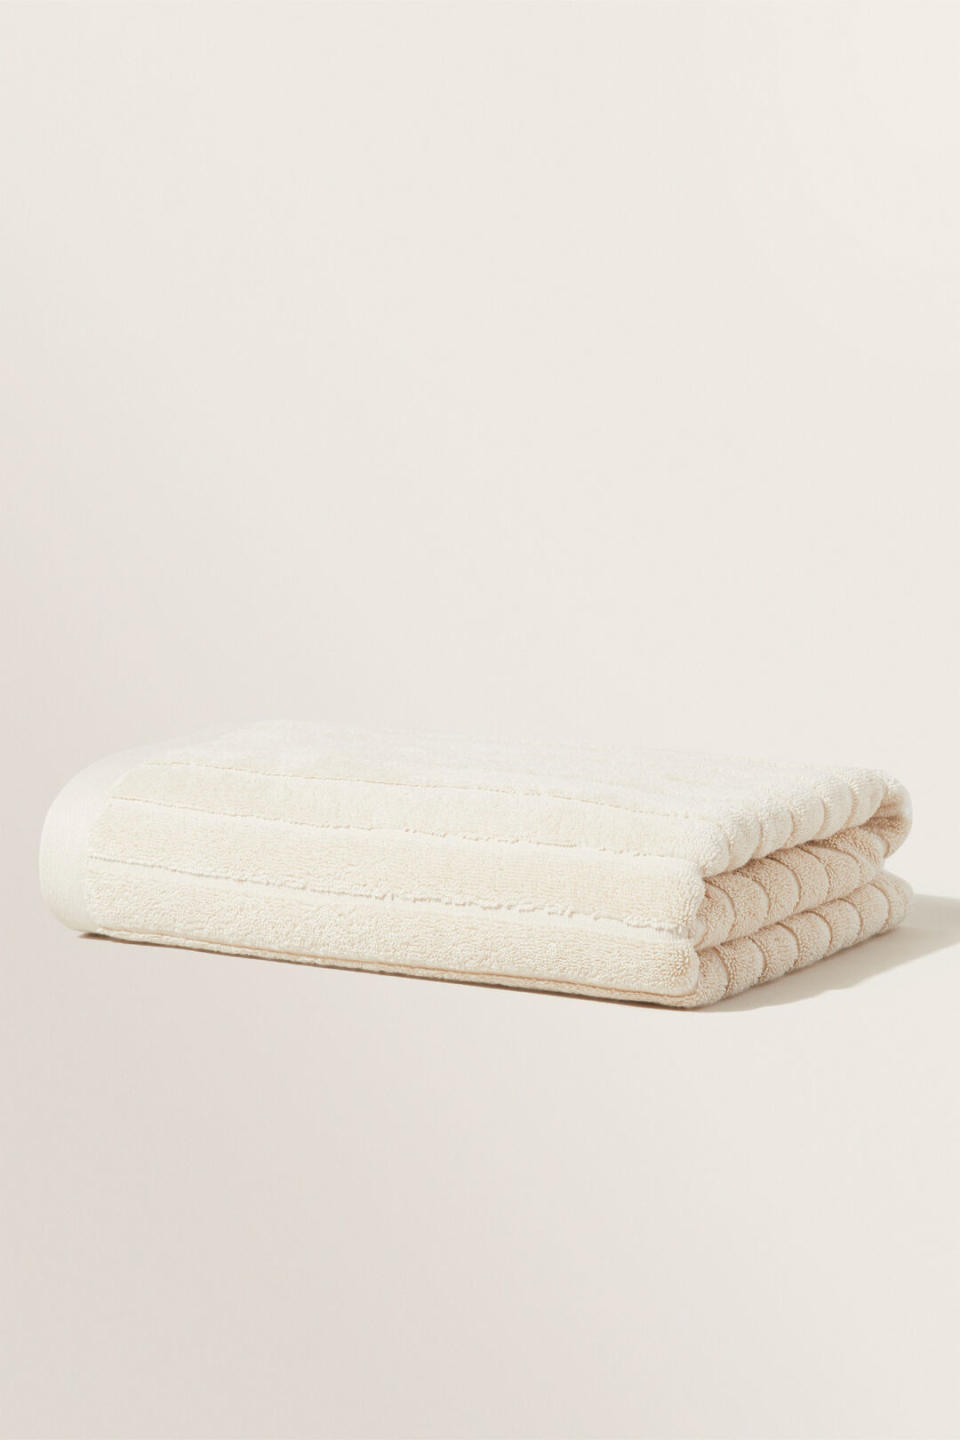 Cotton Stripe Bath Towel in Ivory Cream, $39.95